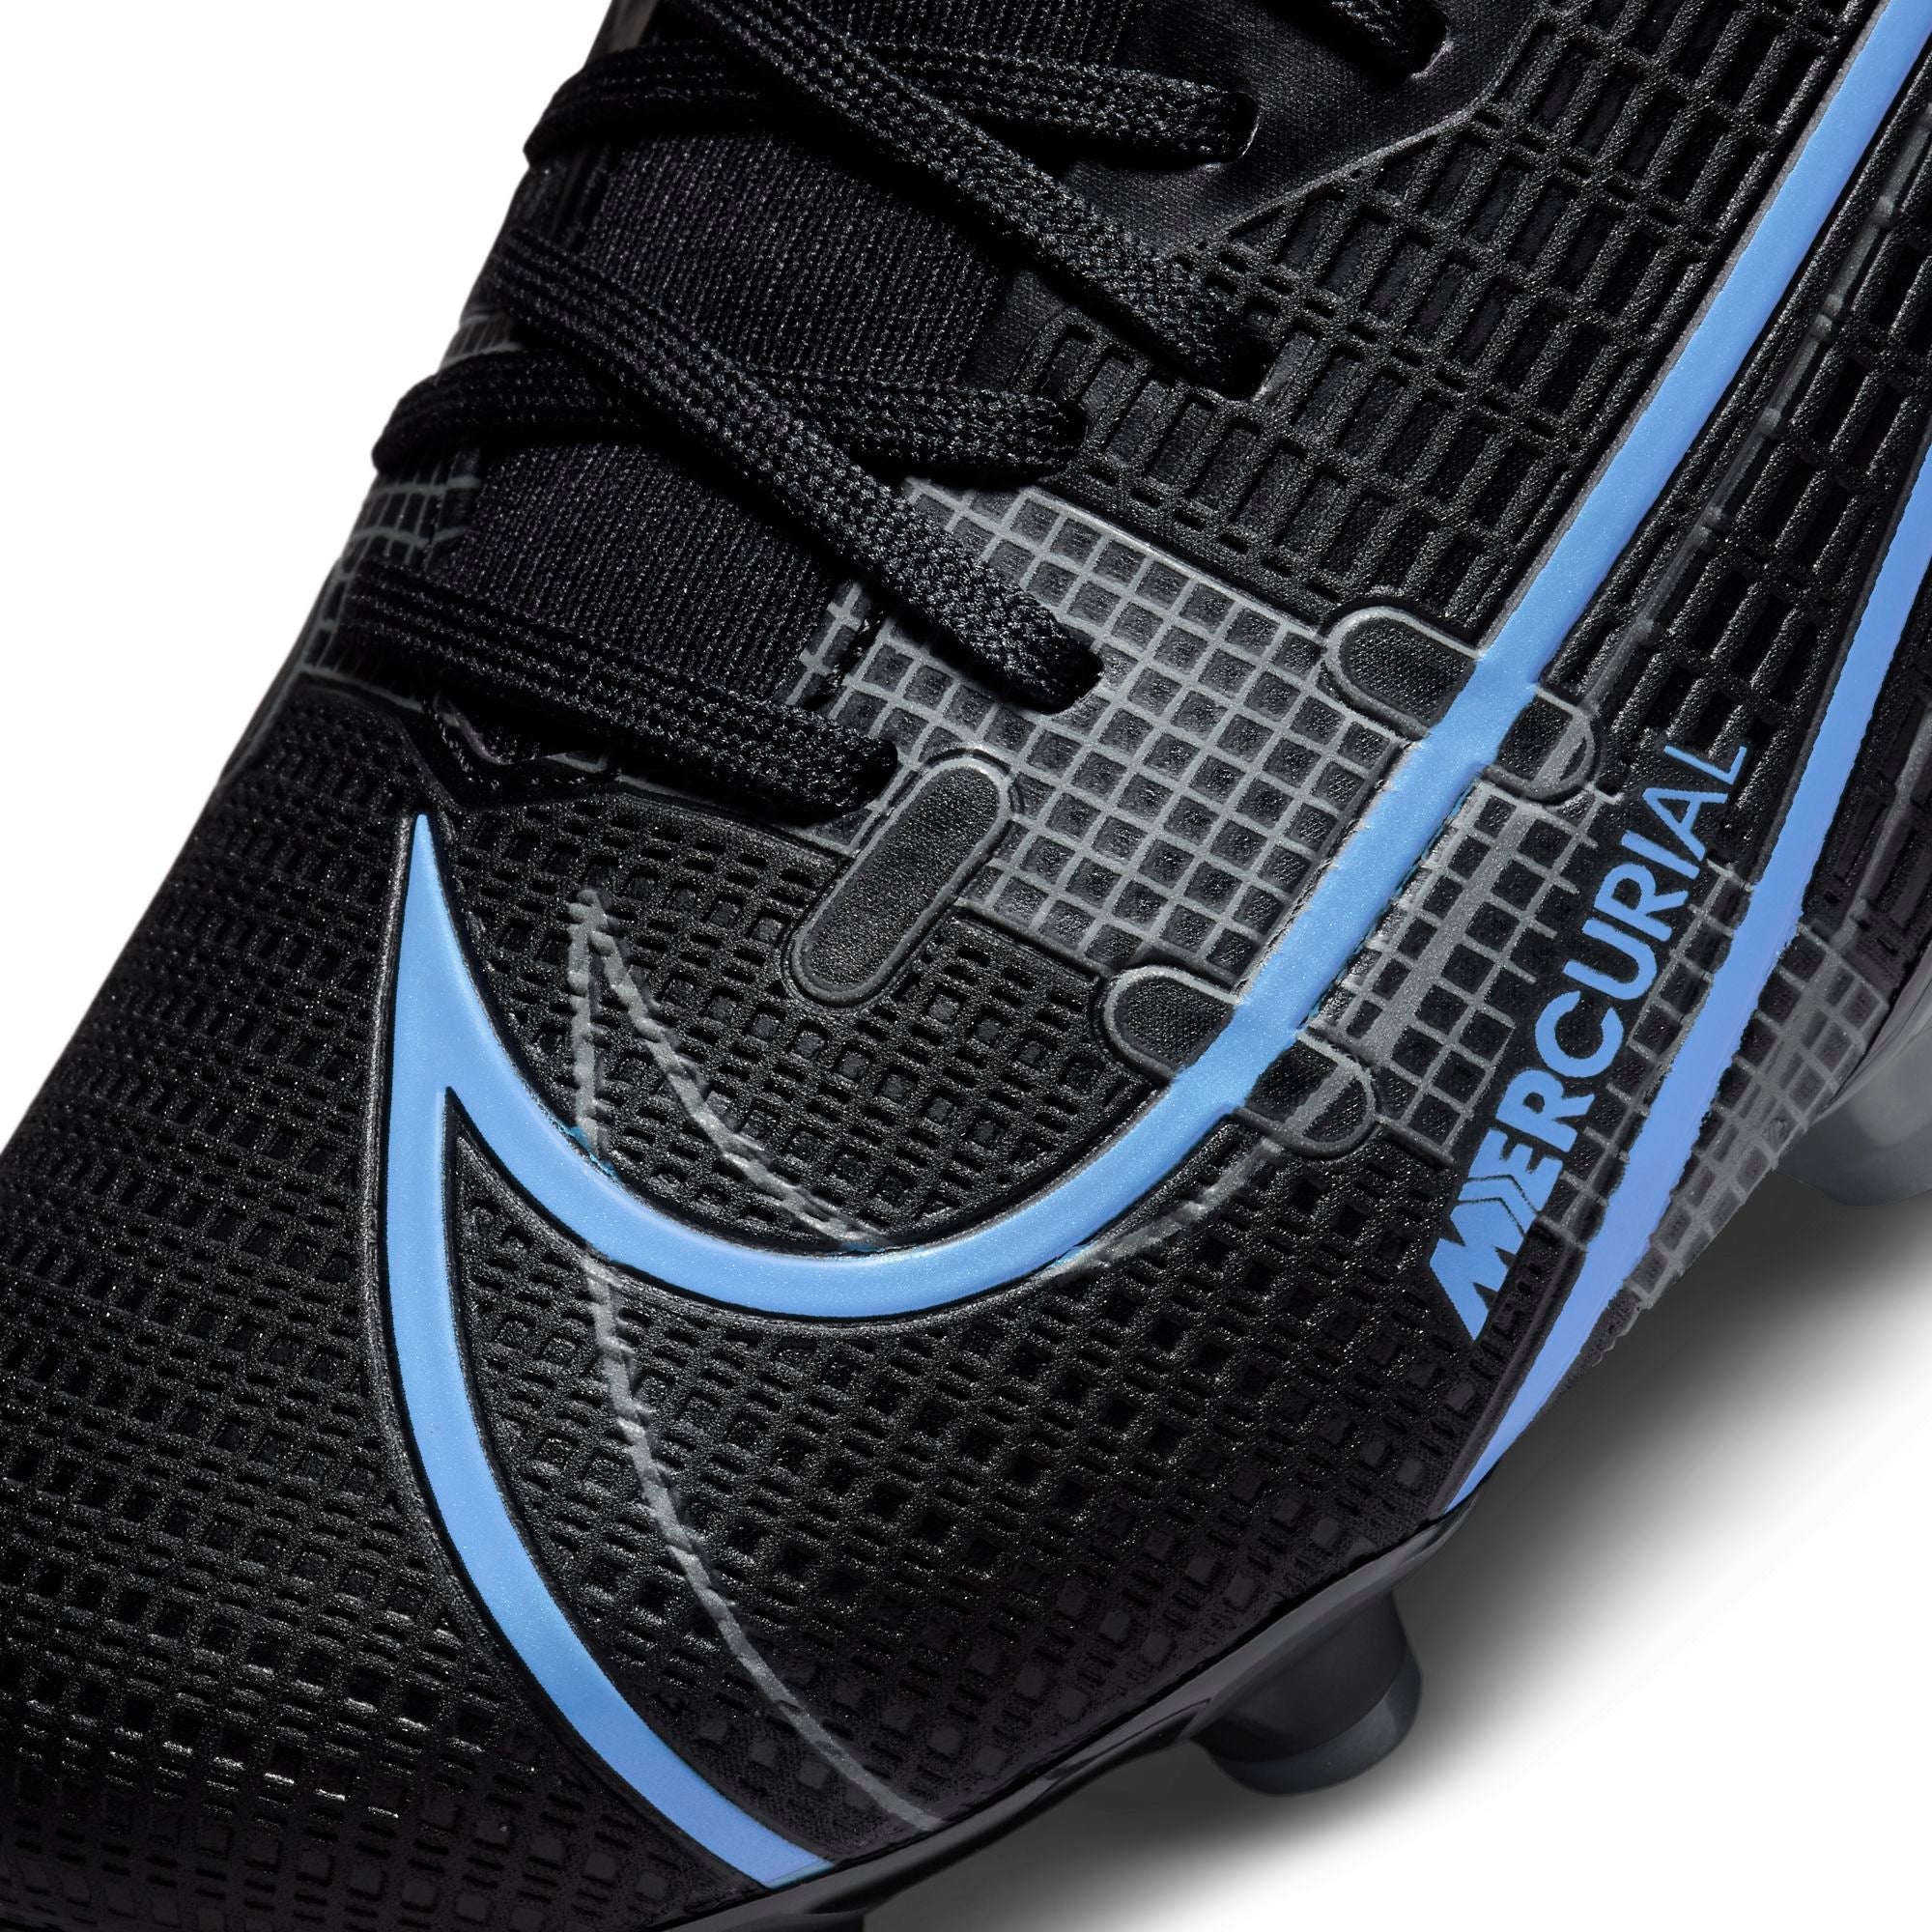 Nike Mercurial Superfly 8 Academy MD Multi-Ground Football Boots Black/Black/Iroman Grey